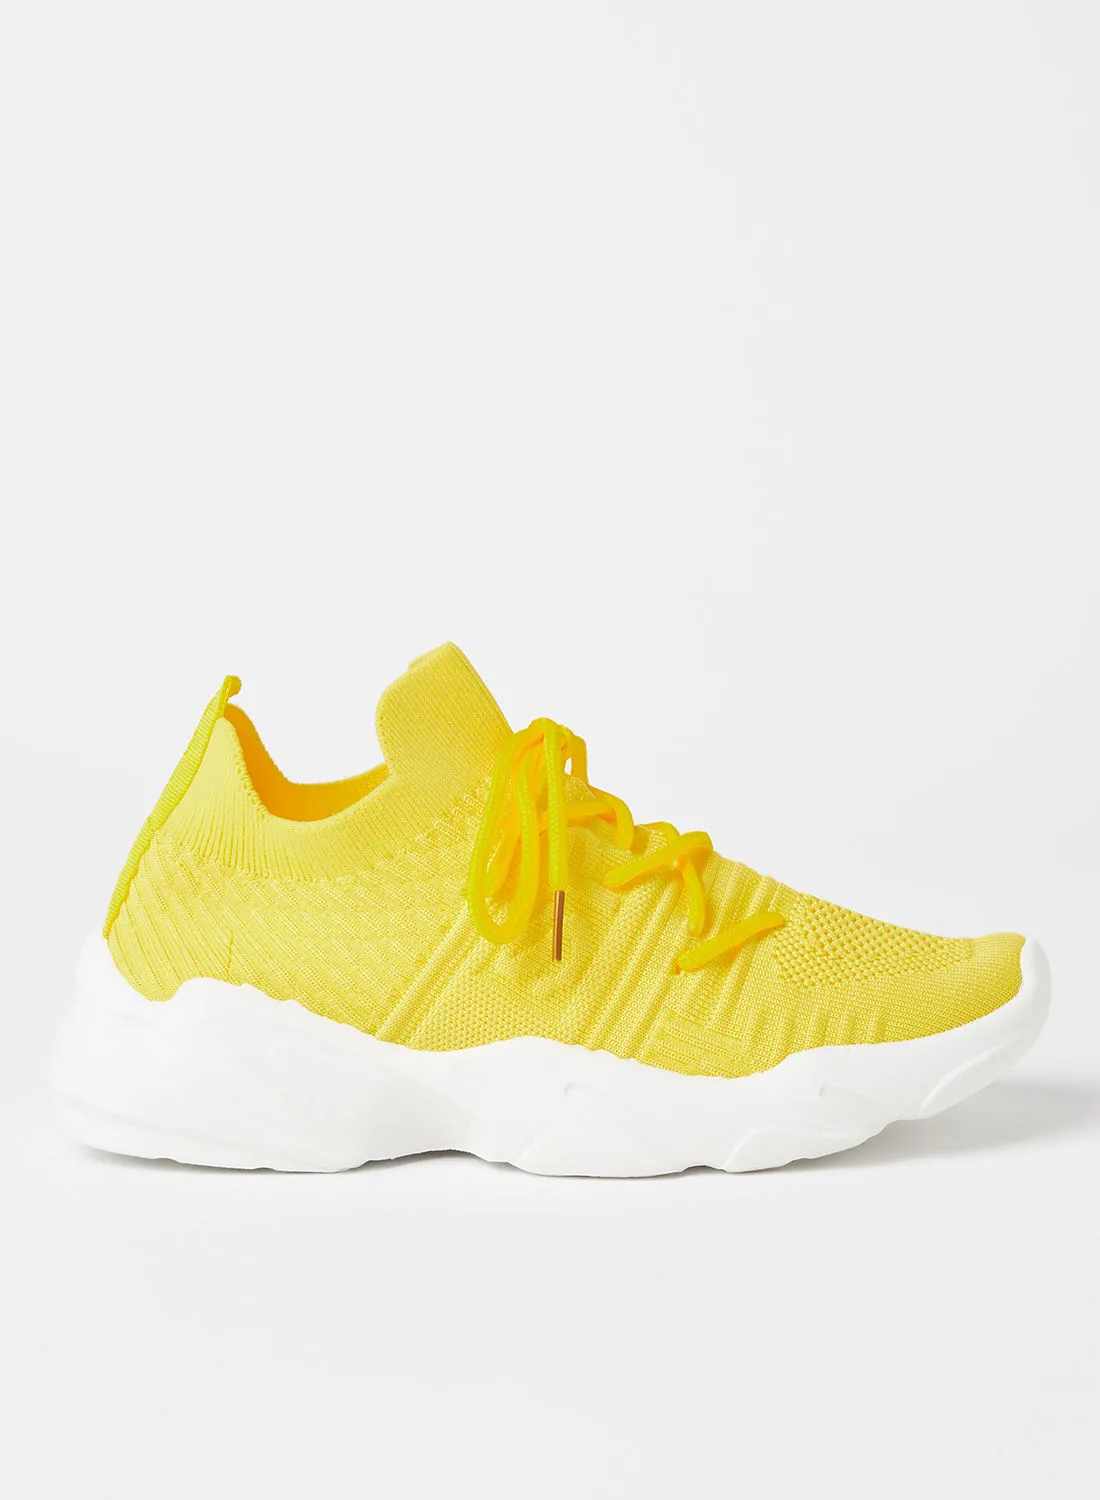 LABEL RAIL Mesh Sneakers Yellow